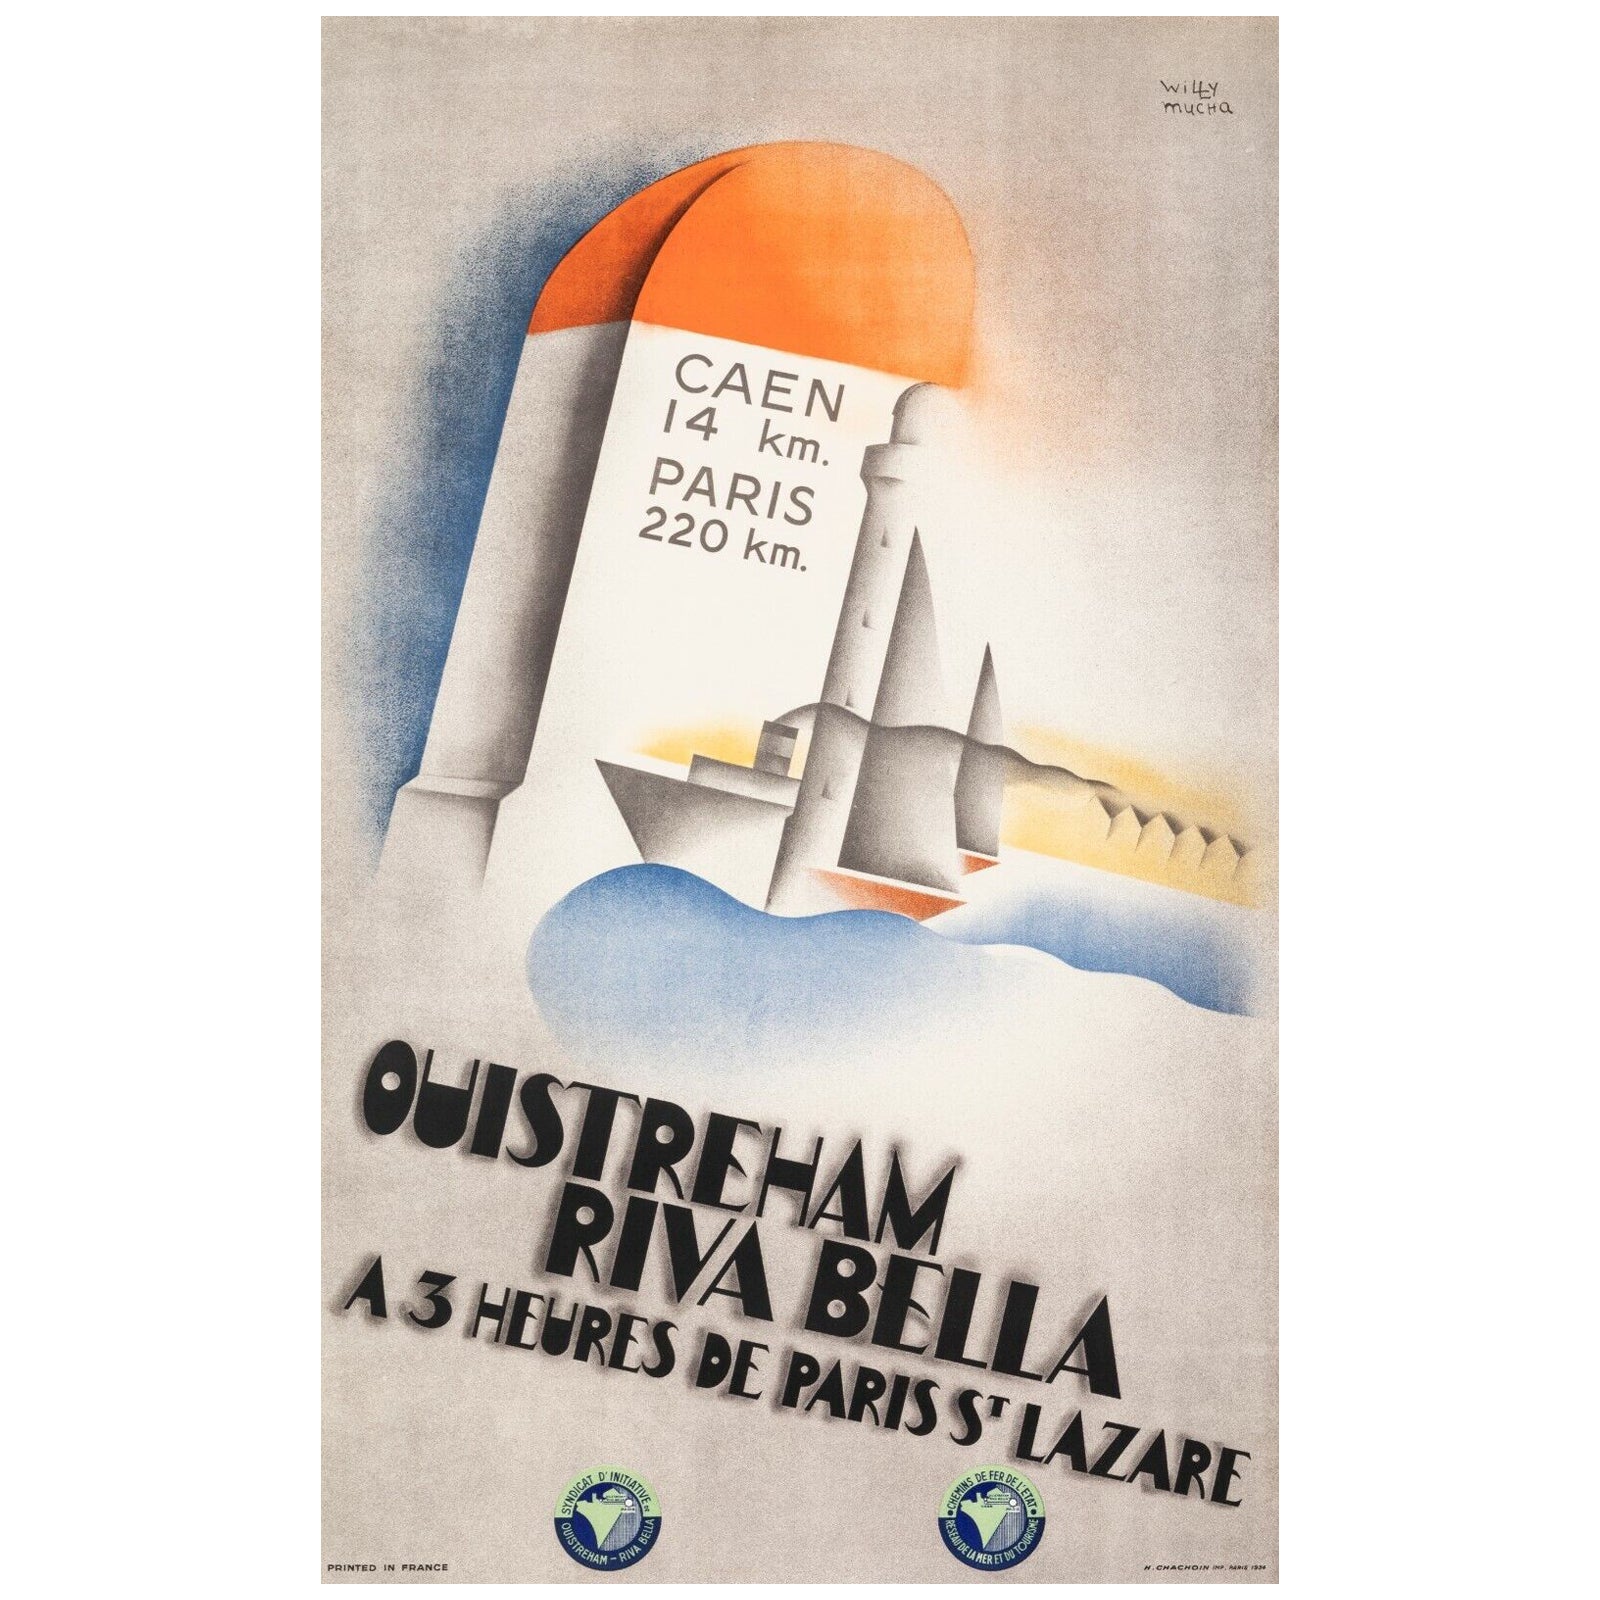 Original Art Deco Travel Poster-mucha-ouistreham Normandie-Voile, 1934